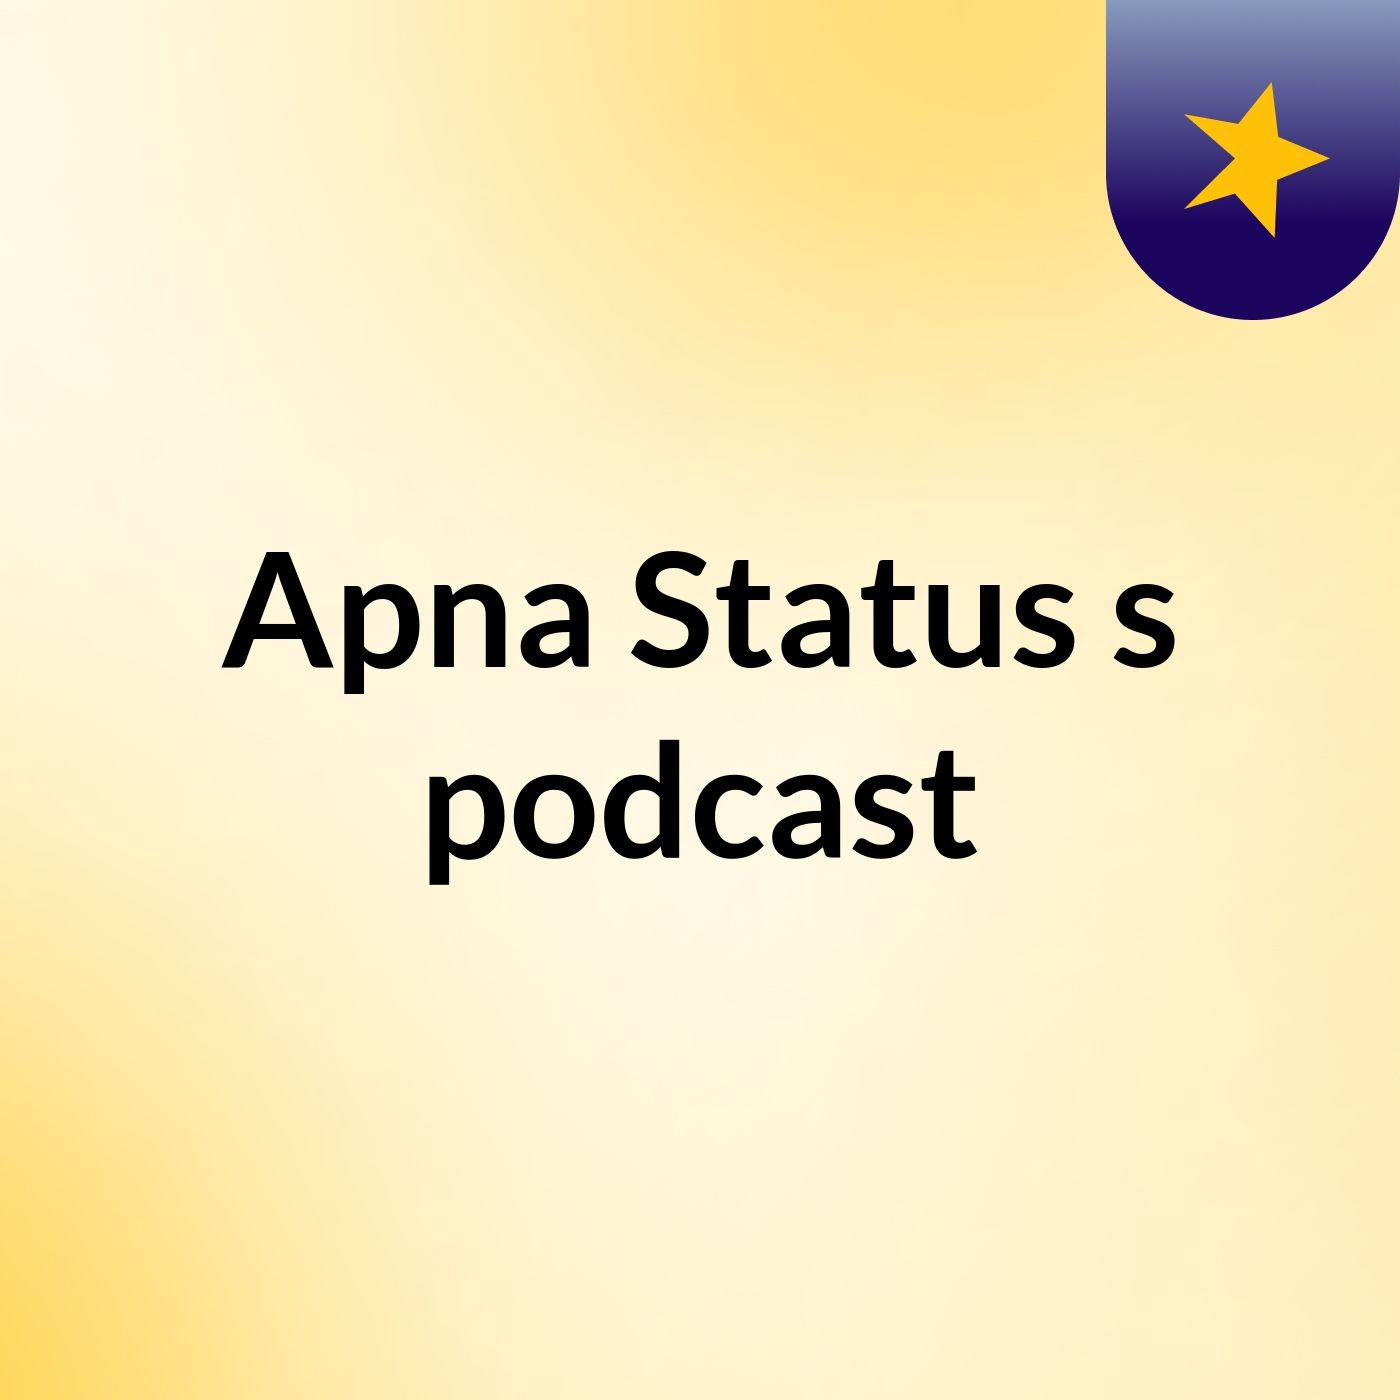 Episode 2 - Apna Status's podcast